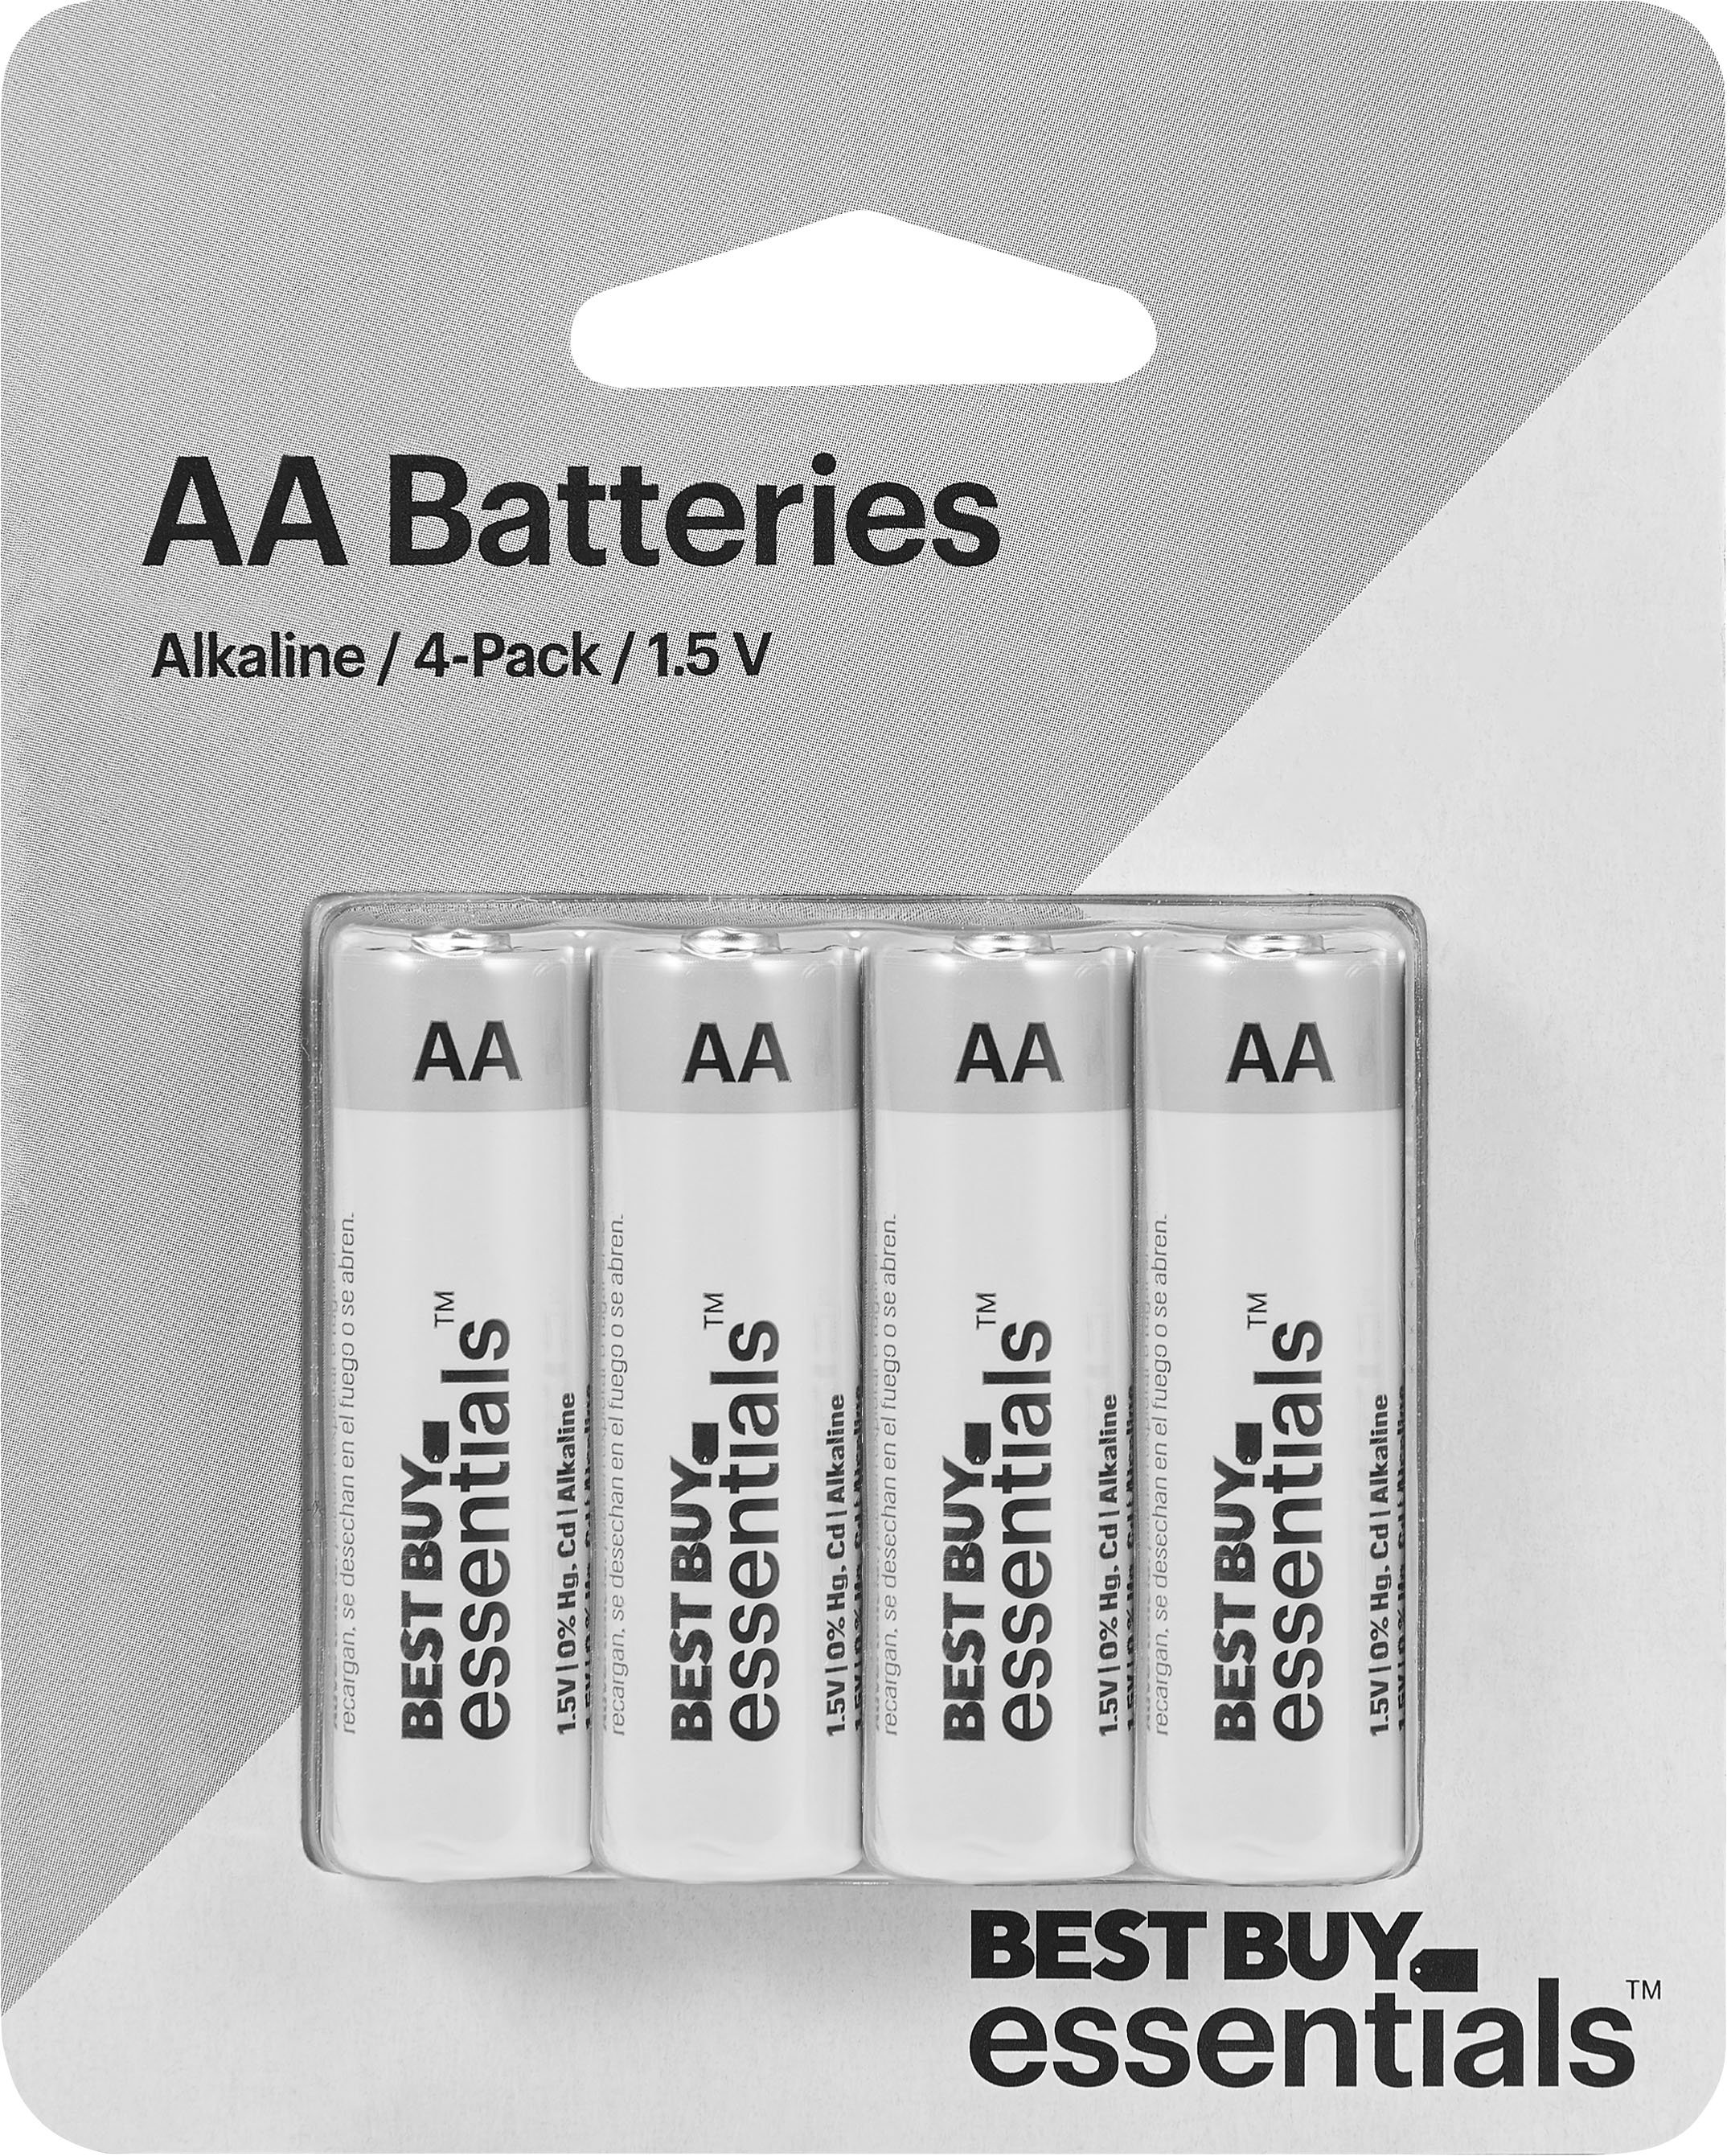 Best Buy essentials™ - AA Batteries (4-Pack)